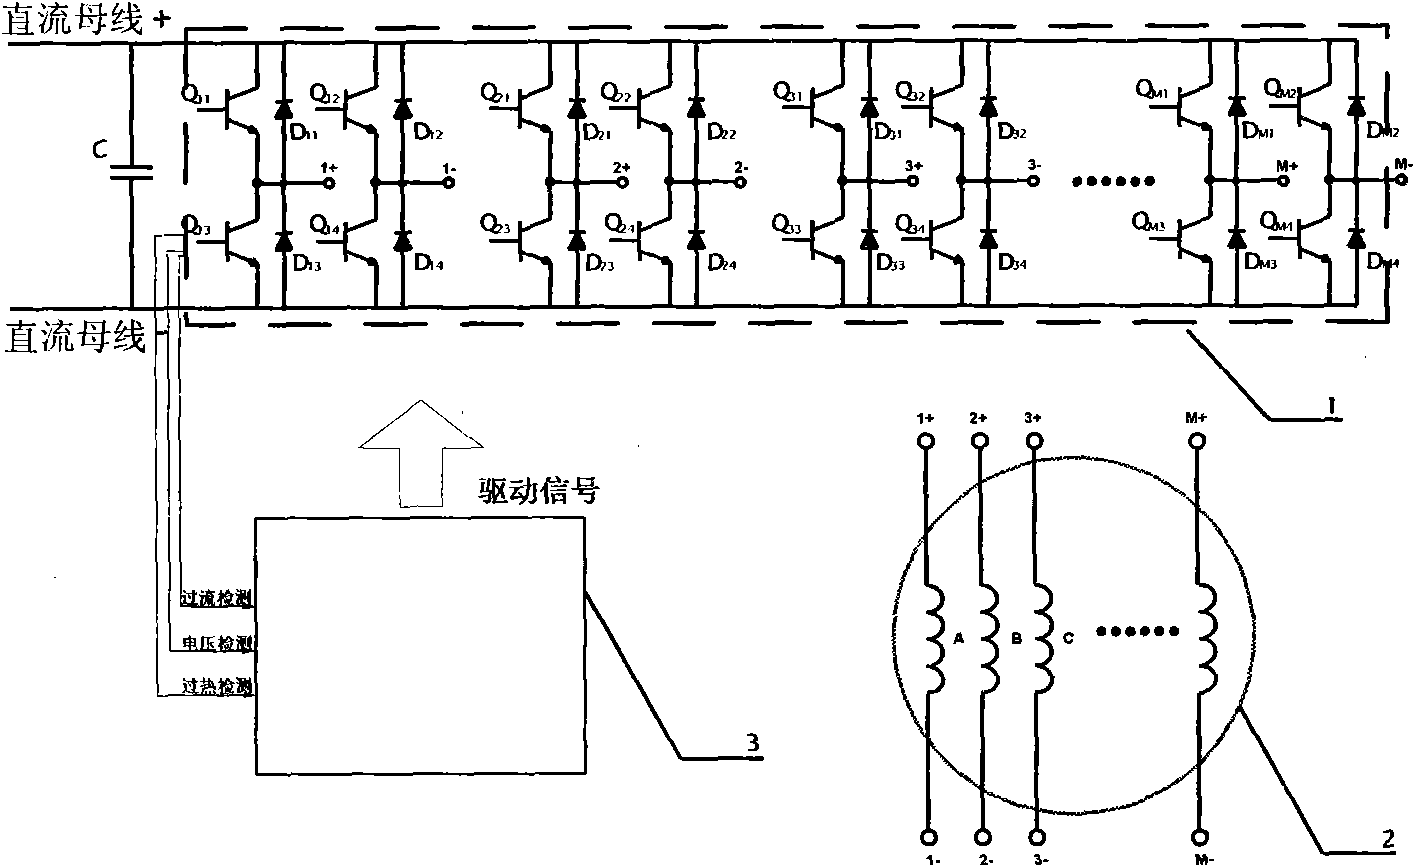 Multiphase permanent magnet fault-tolerant motor control system in half-bridge structure